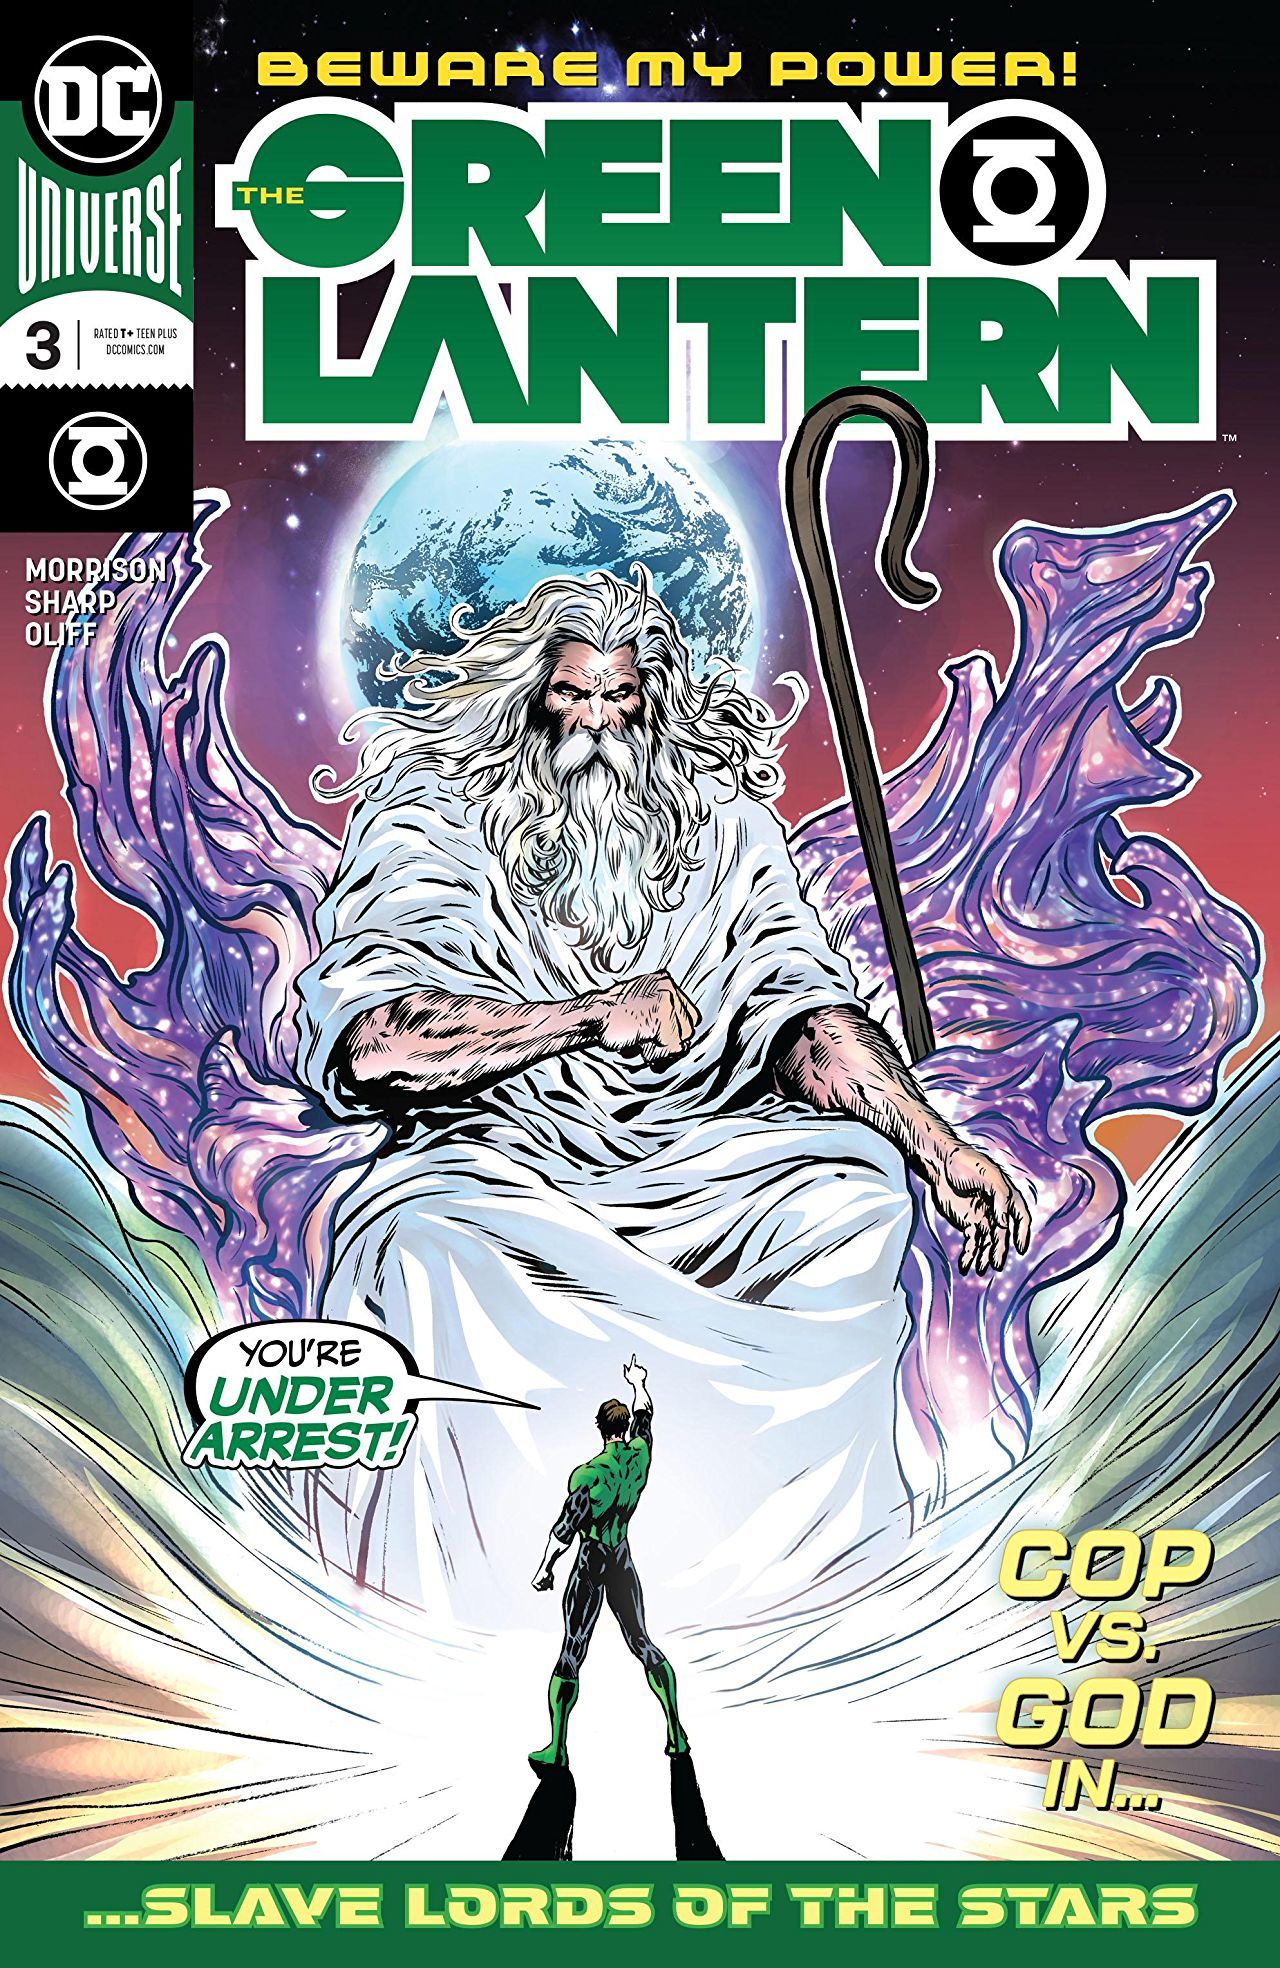 The Green Lantern #3 review